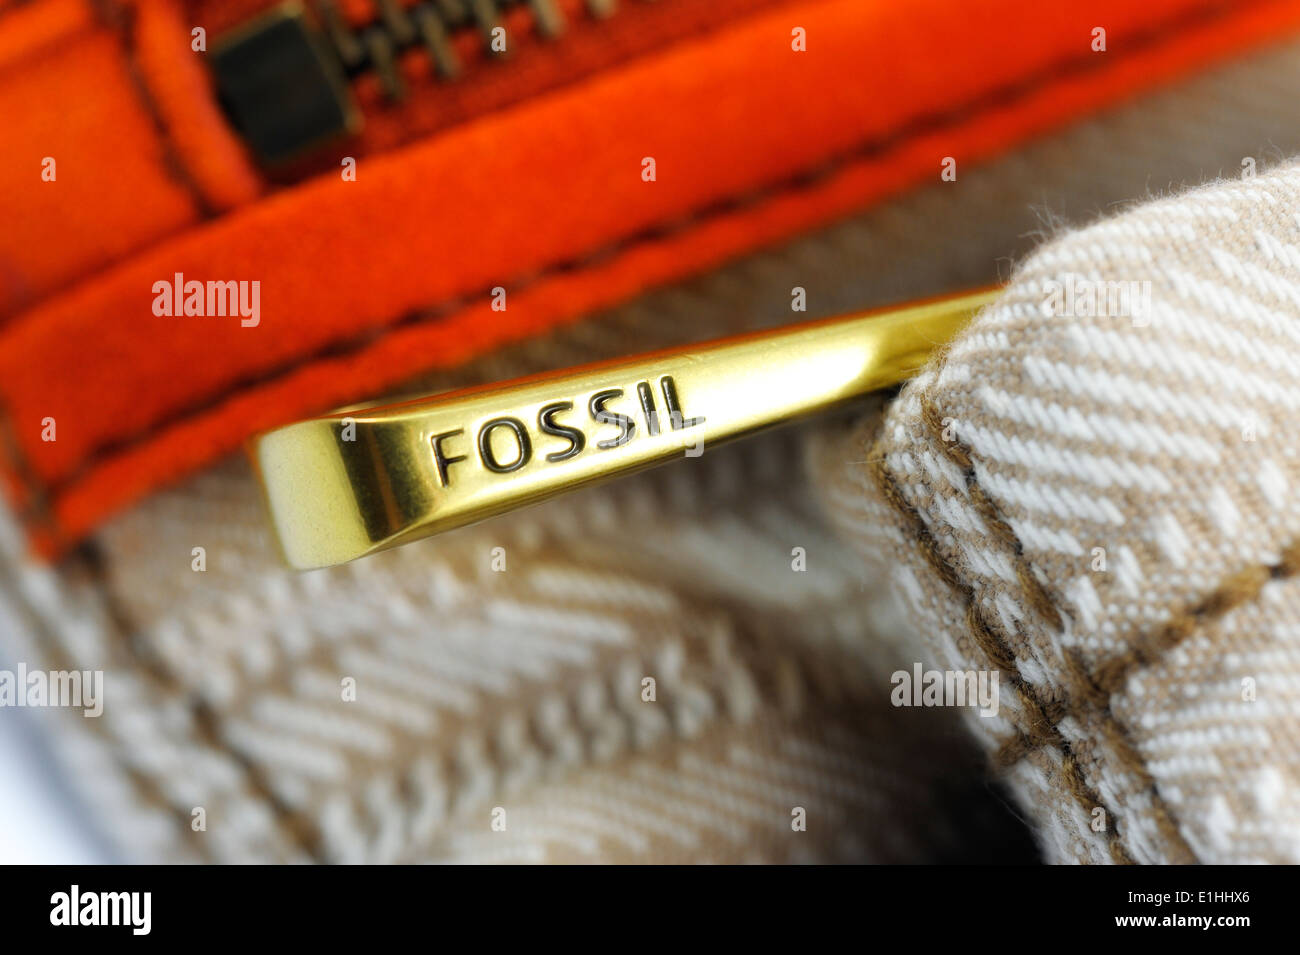 Fossil brand shoulder bag close up detail Stock Photo